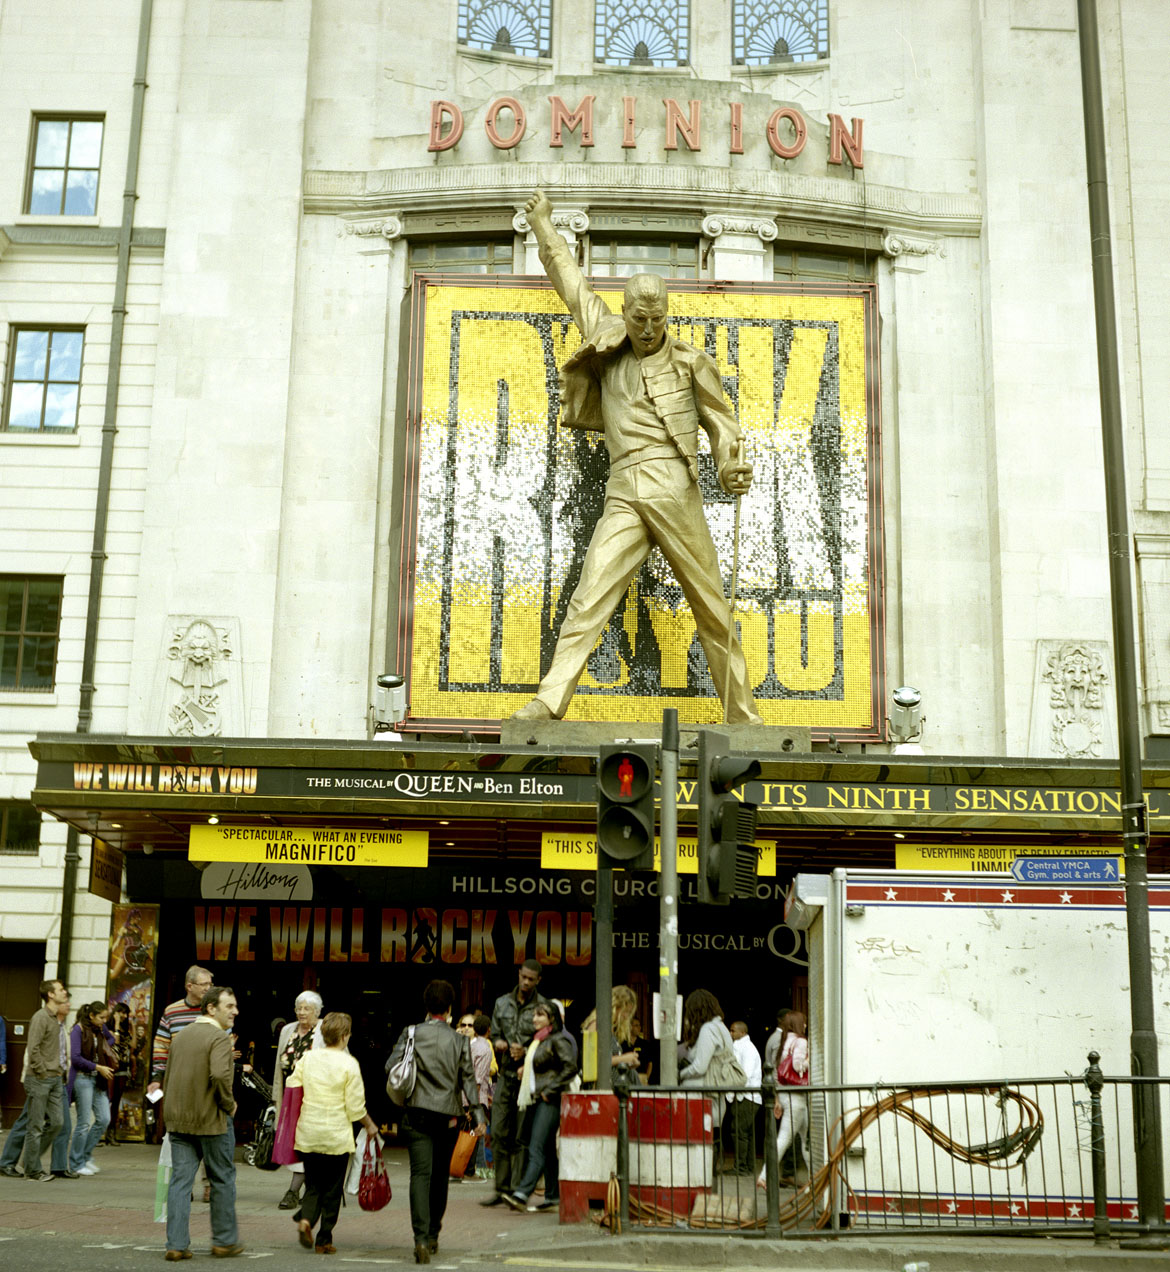 fotka / image Dominion Theatre, Summer in London